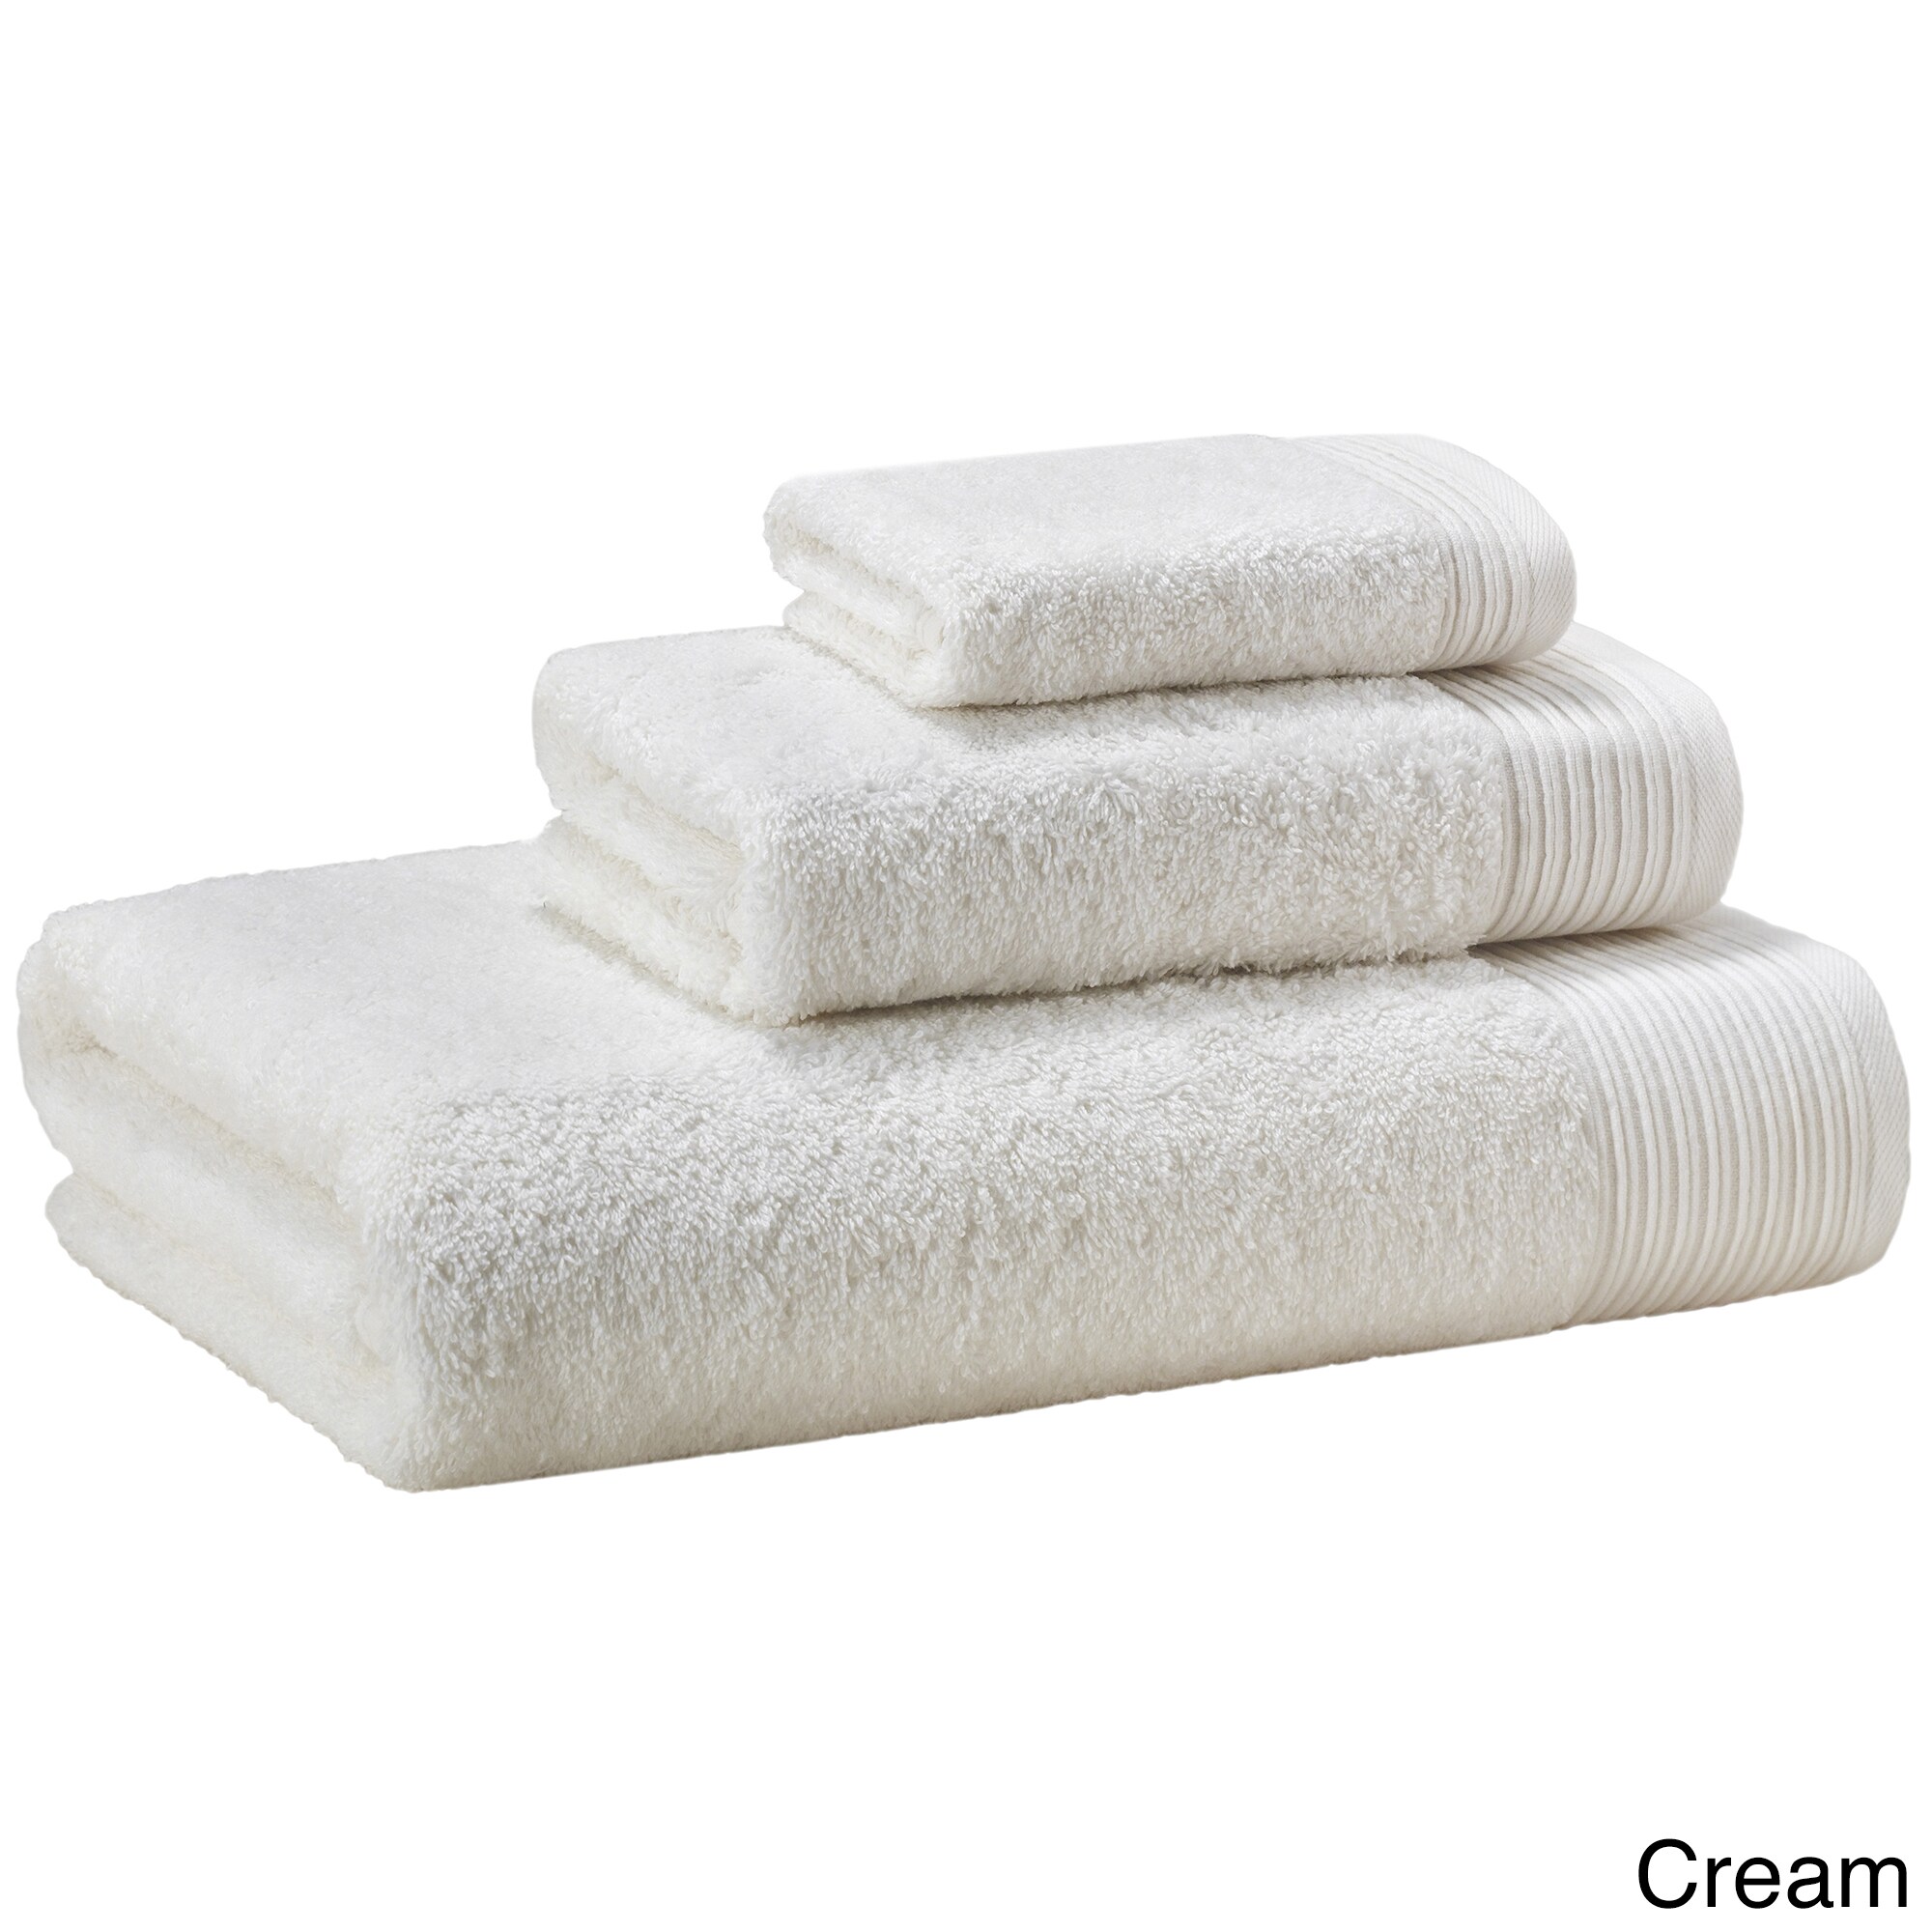 Bilboa 3 Piece Turkish Cotton Towel Set